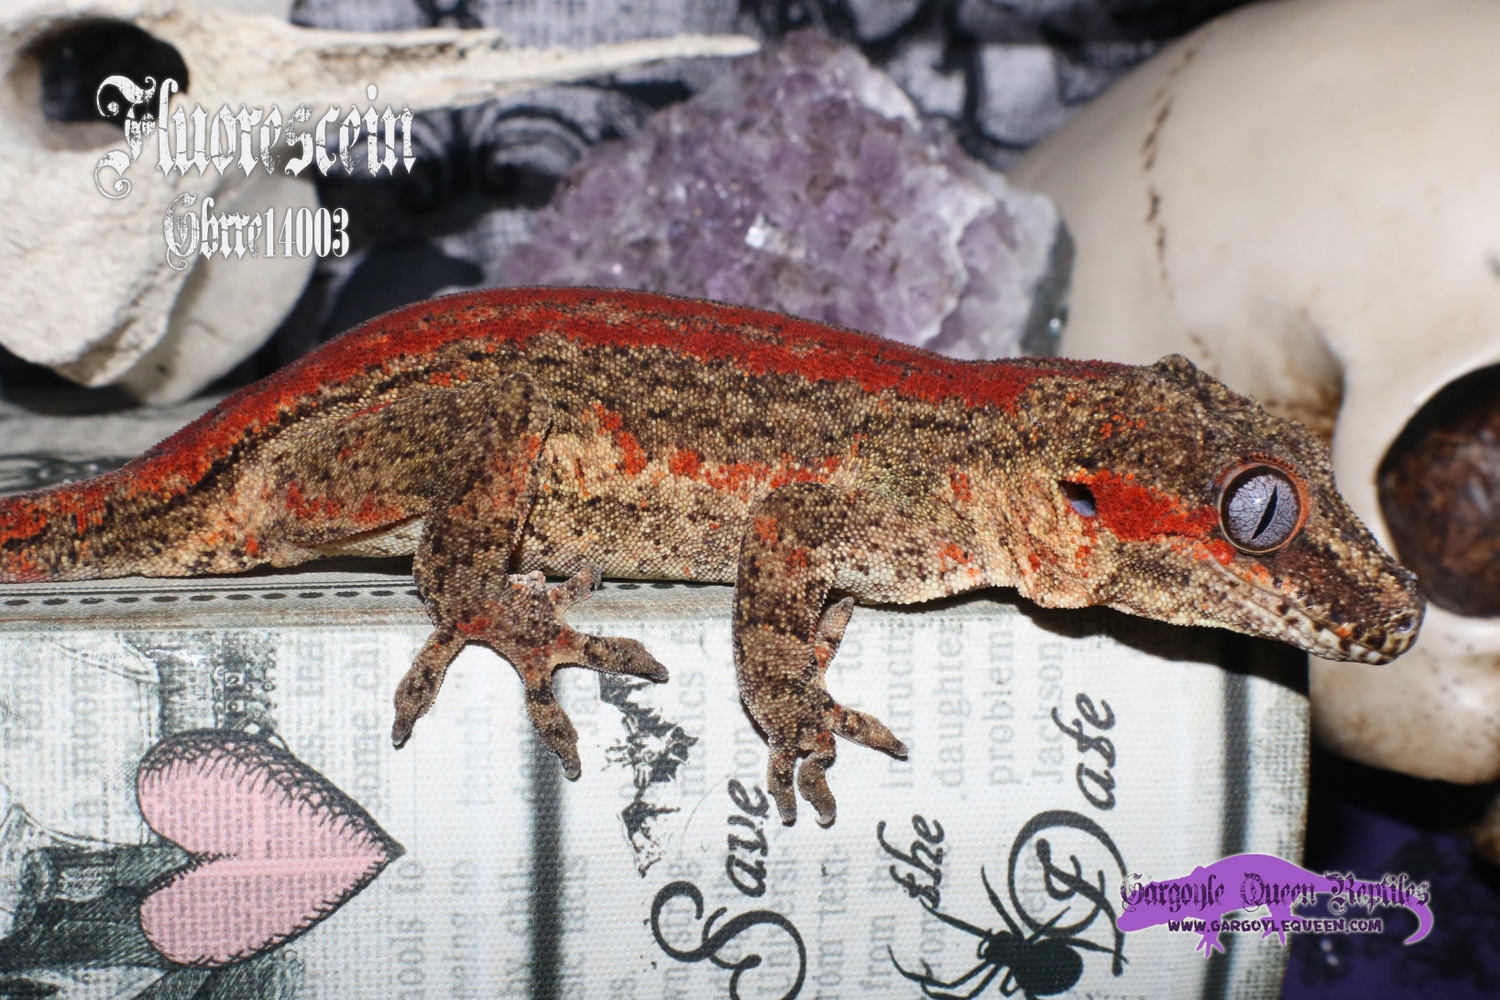 "Fluorescein" Red Stripe Gargoyle Gecko by Gargoyle Queen Reptiles